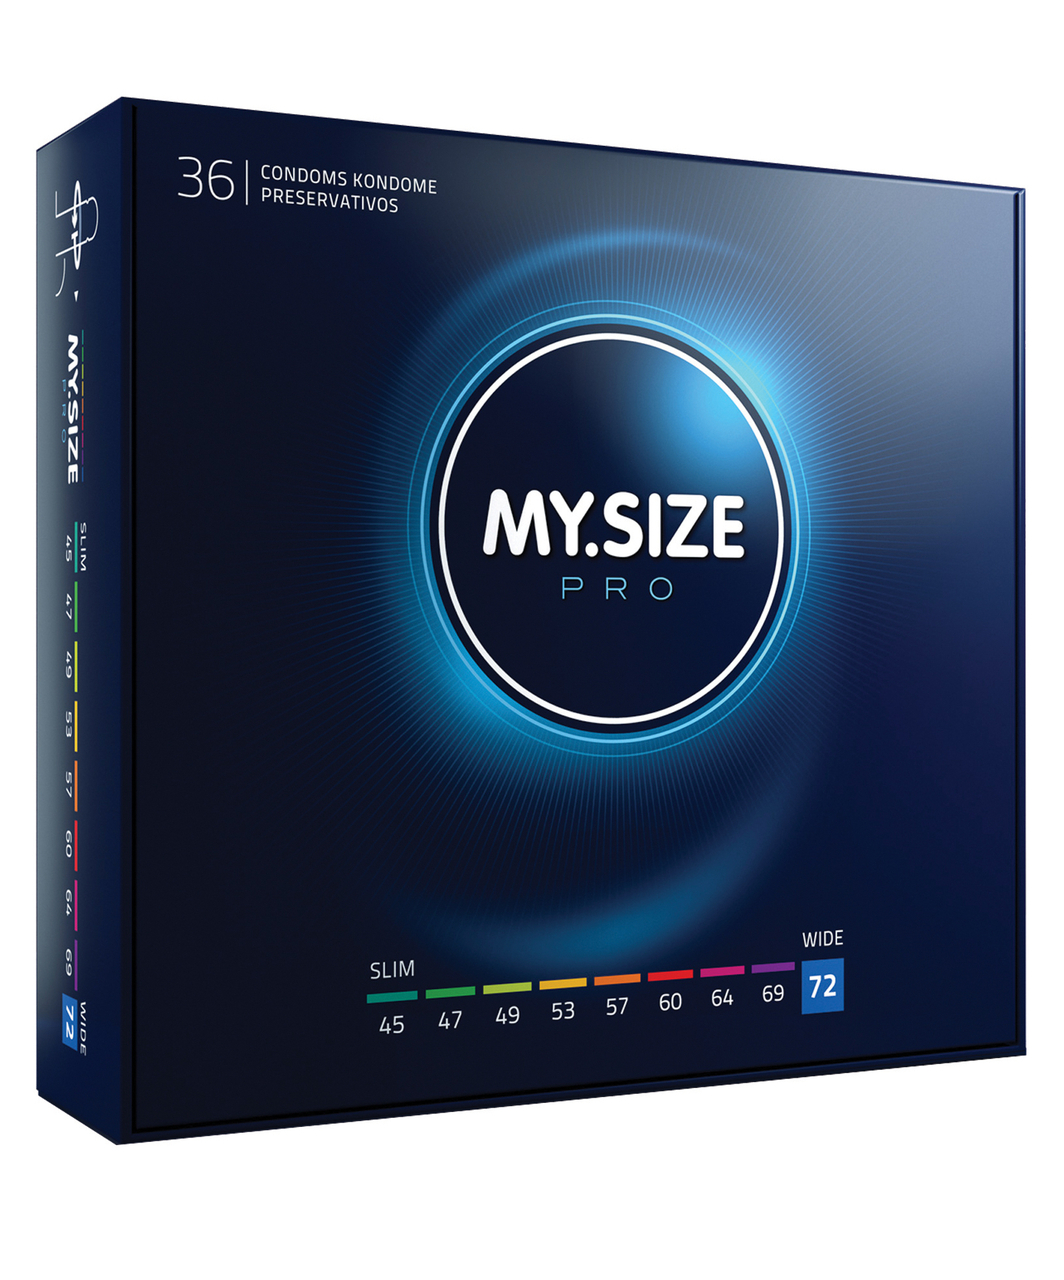 MY.SIZE pro презервативы (36 шт.)